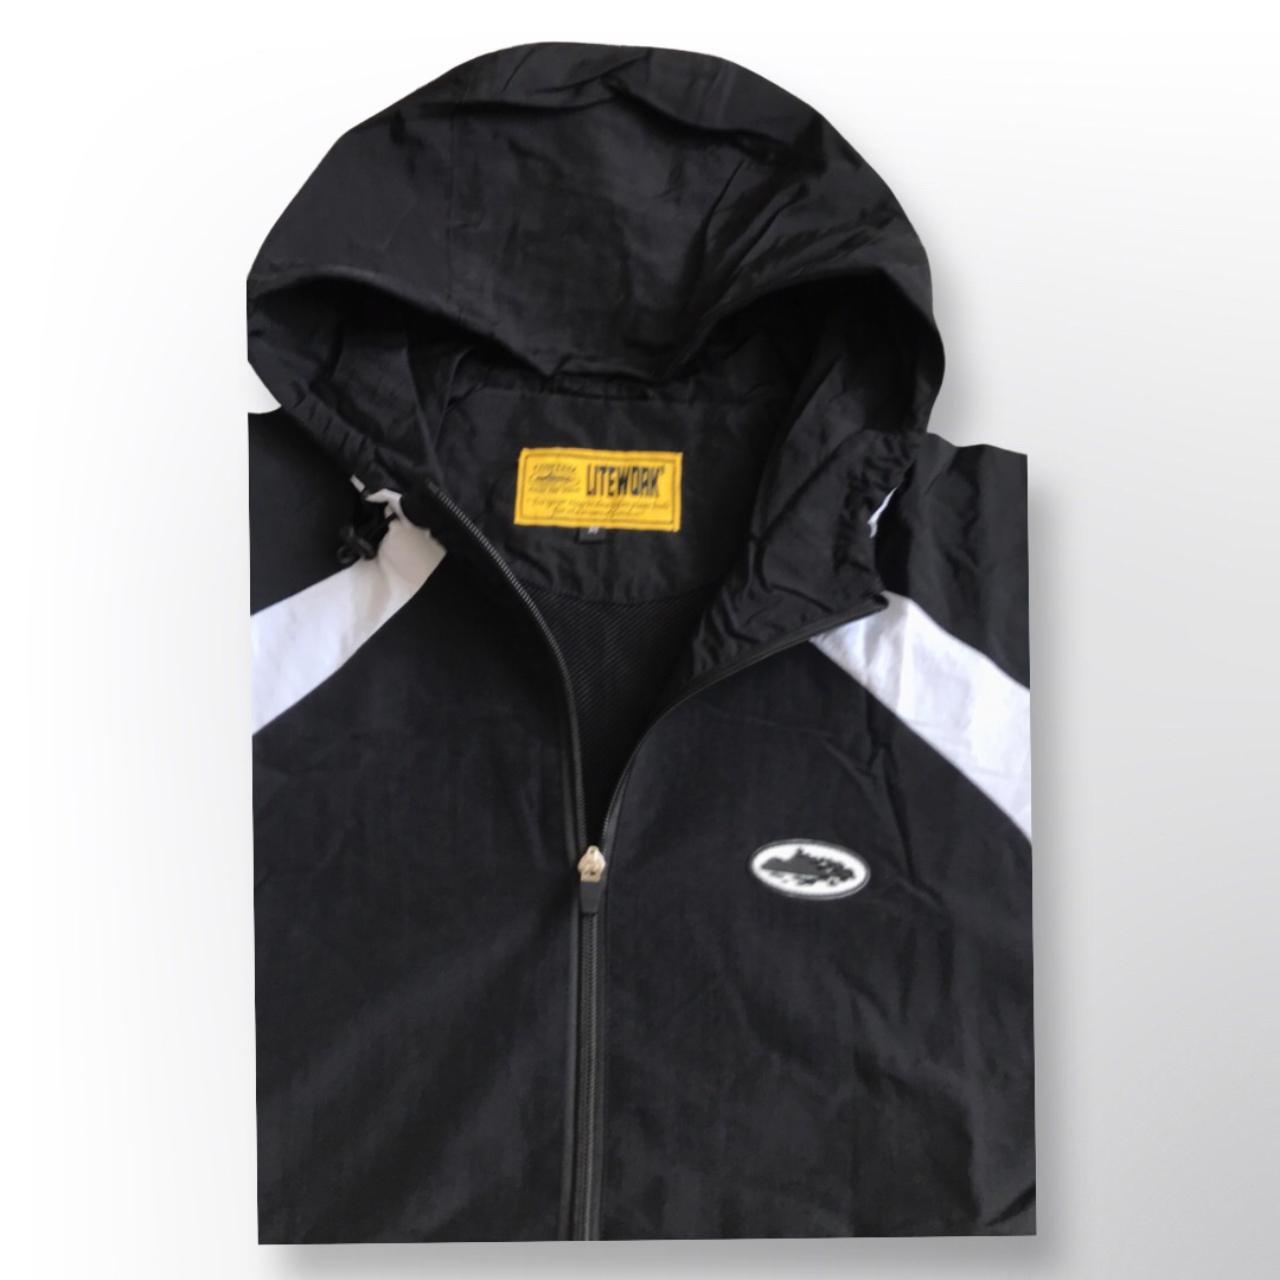 Corteiz windbreaker jacket XL available Send a offer - Depop